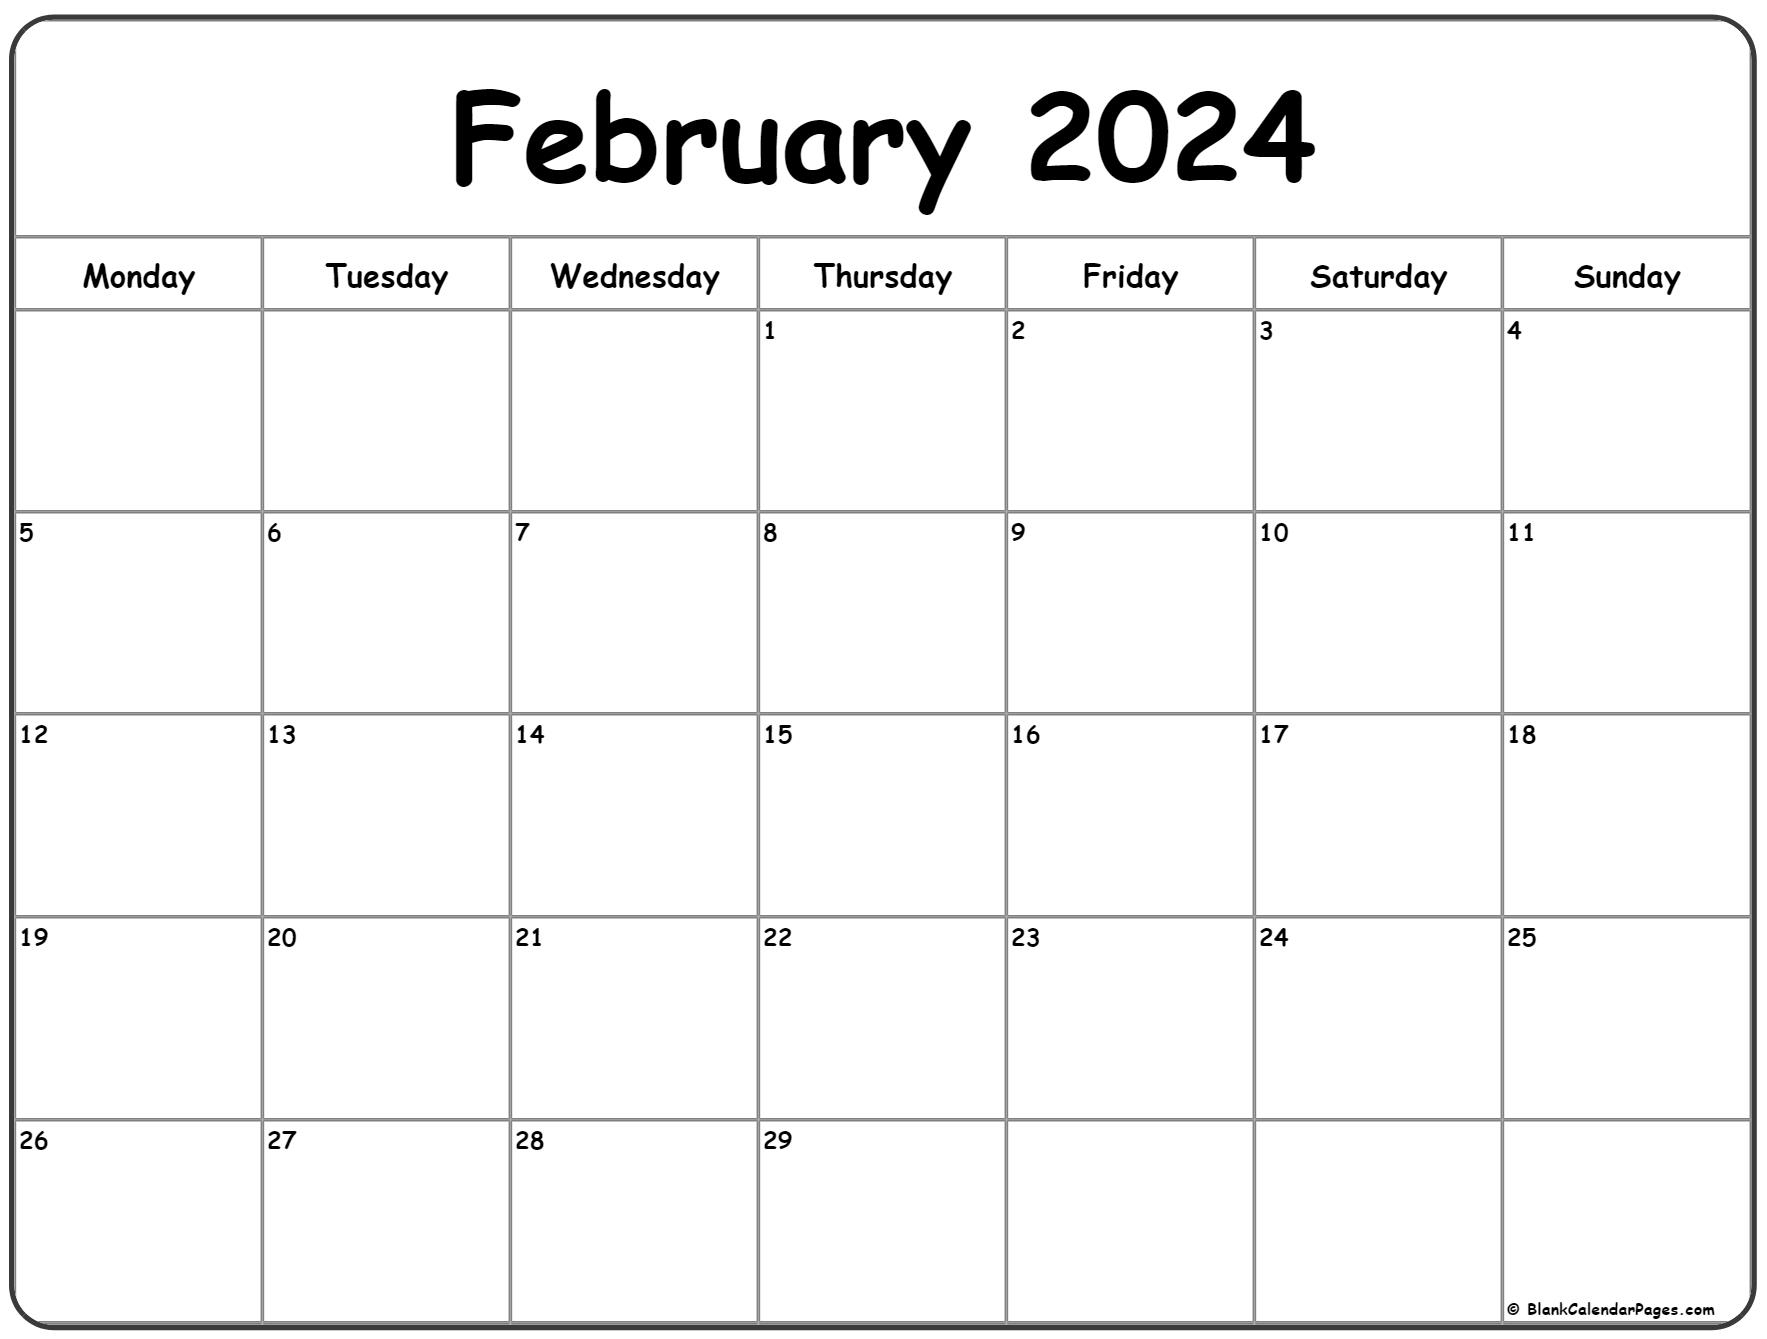 February 2024 Monday Calendar | Monday To Sunday for Feb Printable Calendar 2024